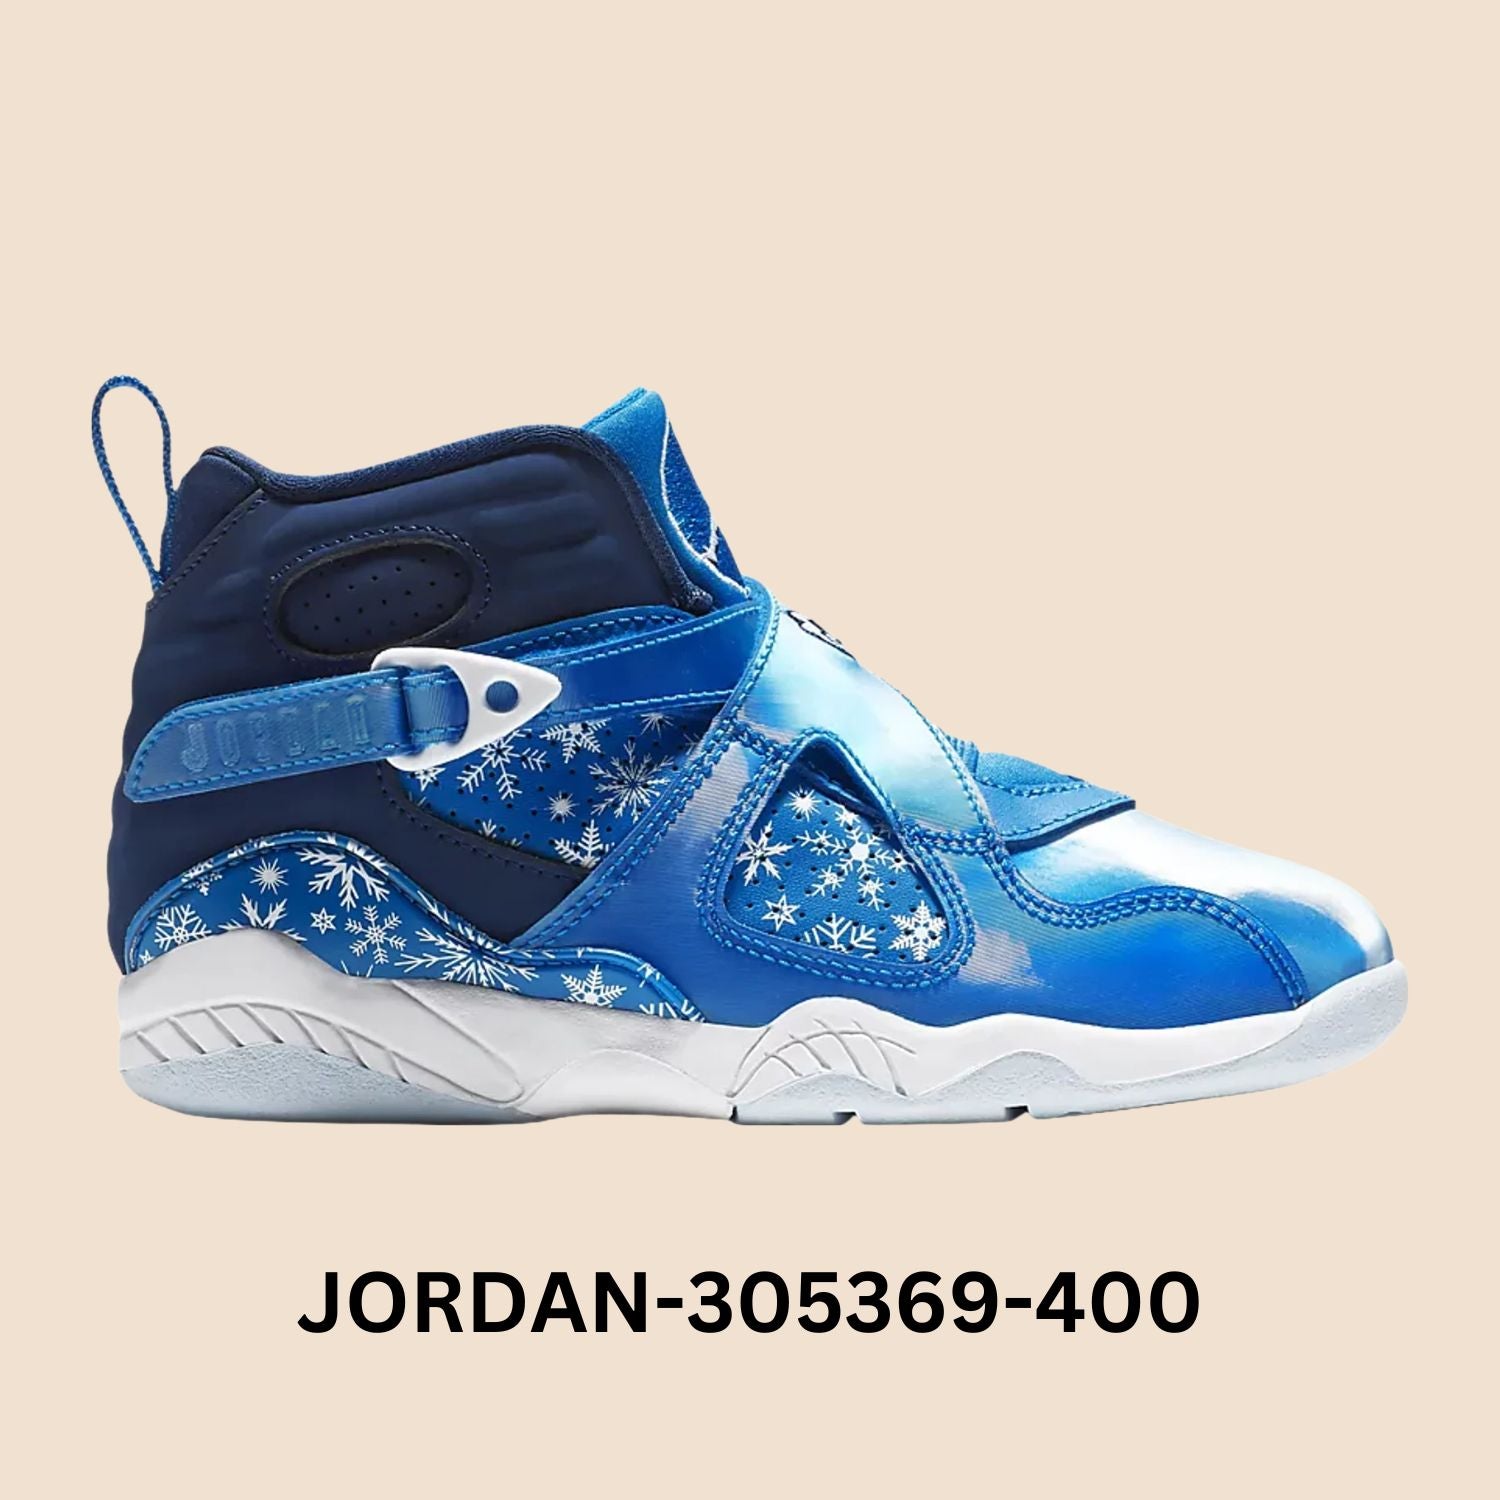 Air Jordan 8 Retro "Snowflake" Pre School Style# 305369-400